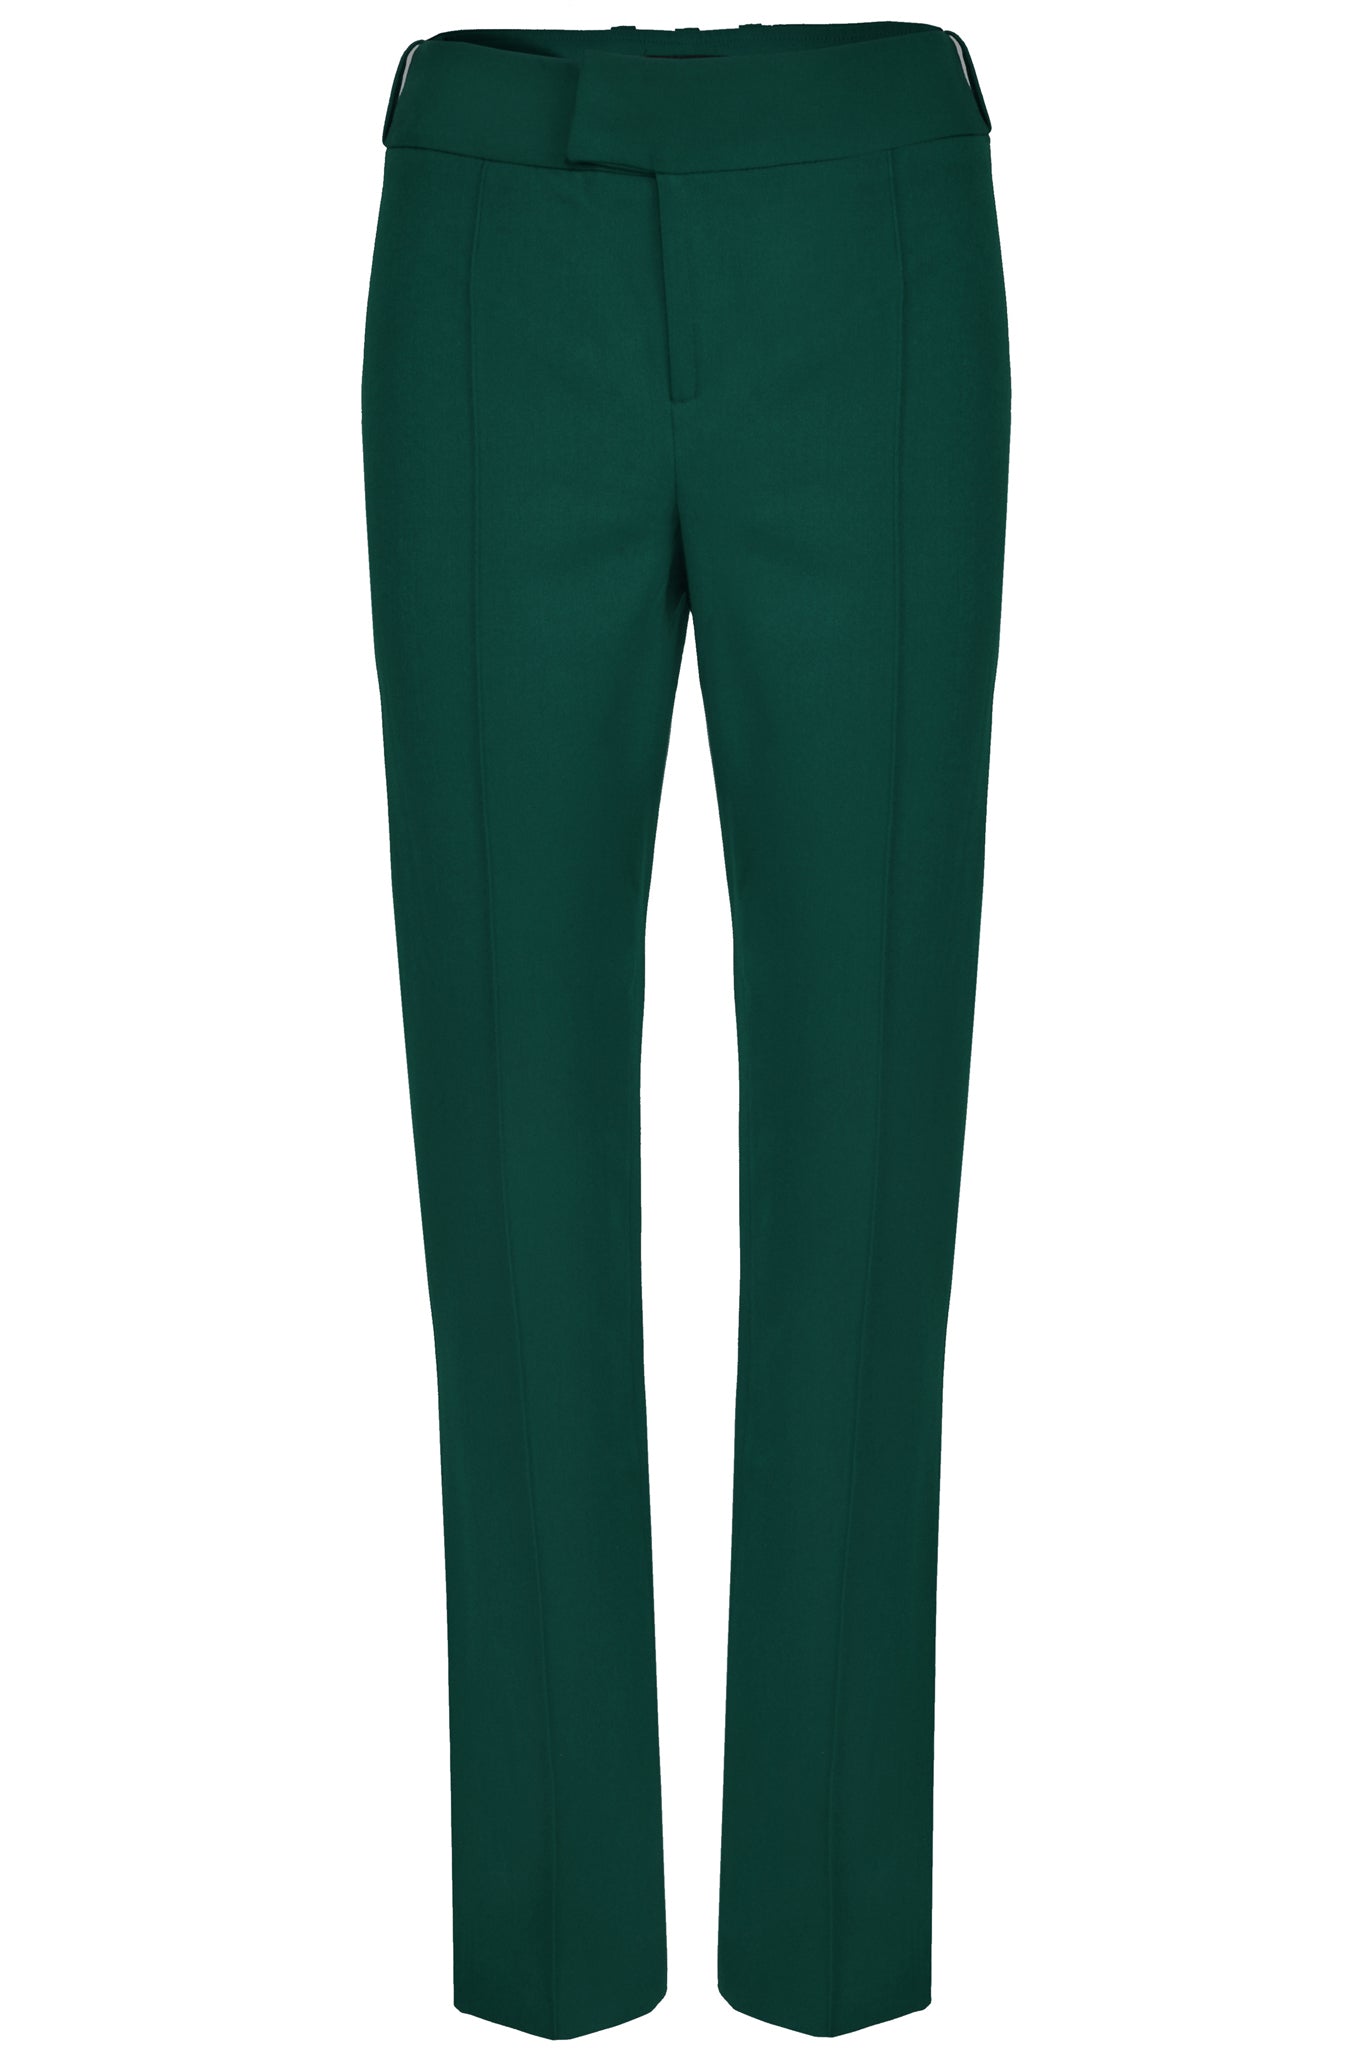 Emerald Twill Pants - High-Waisted Trousers - Slim Leg Pants - Lulus